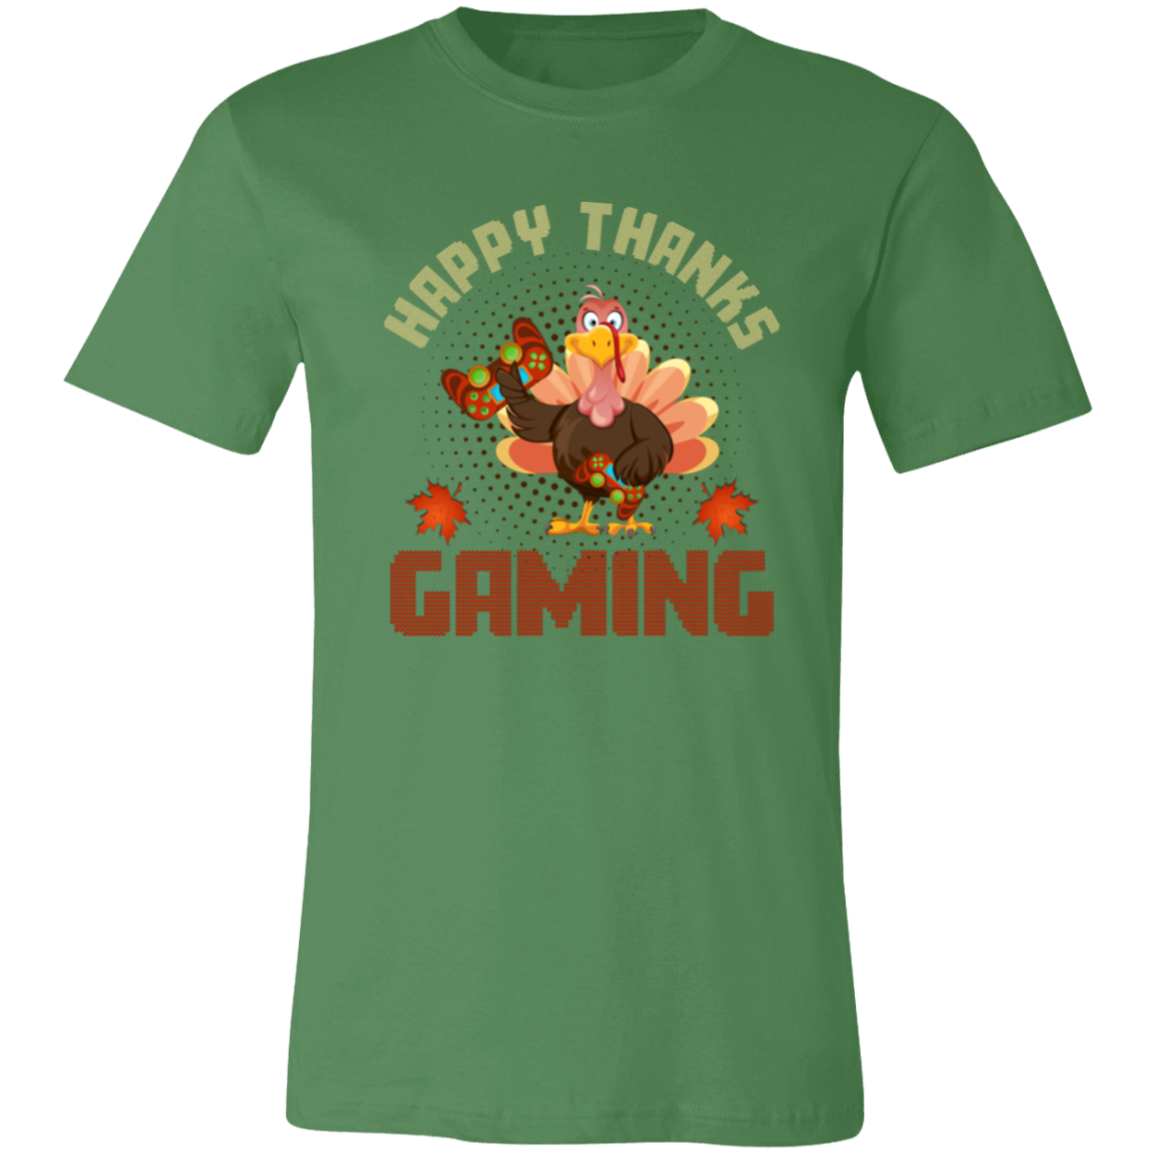 Happy Thanks Gaming Shirt